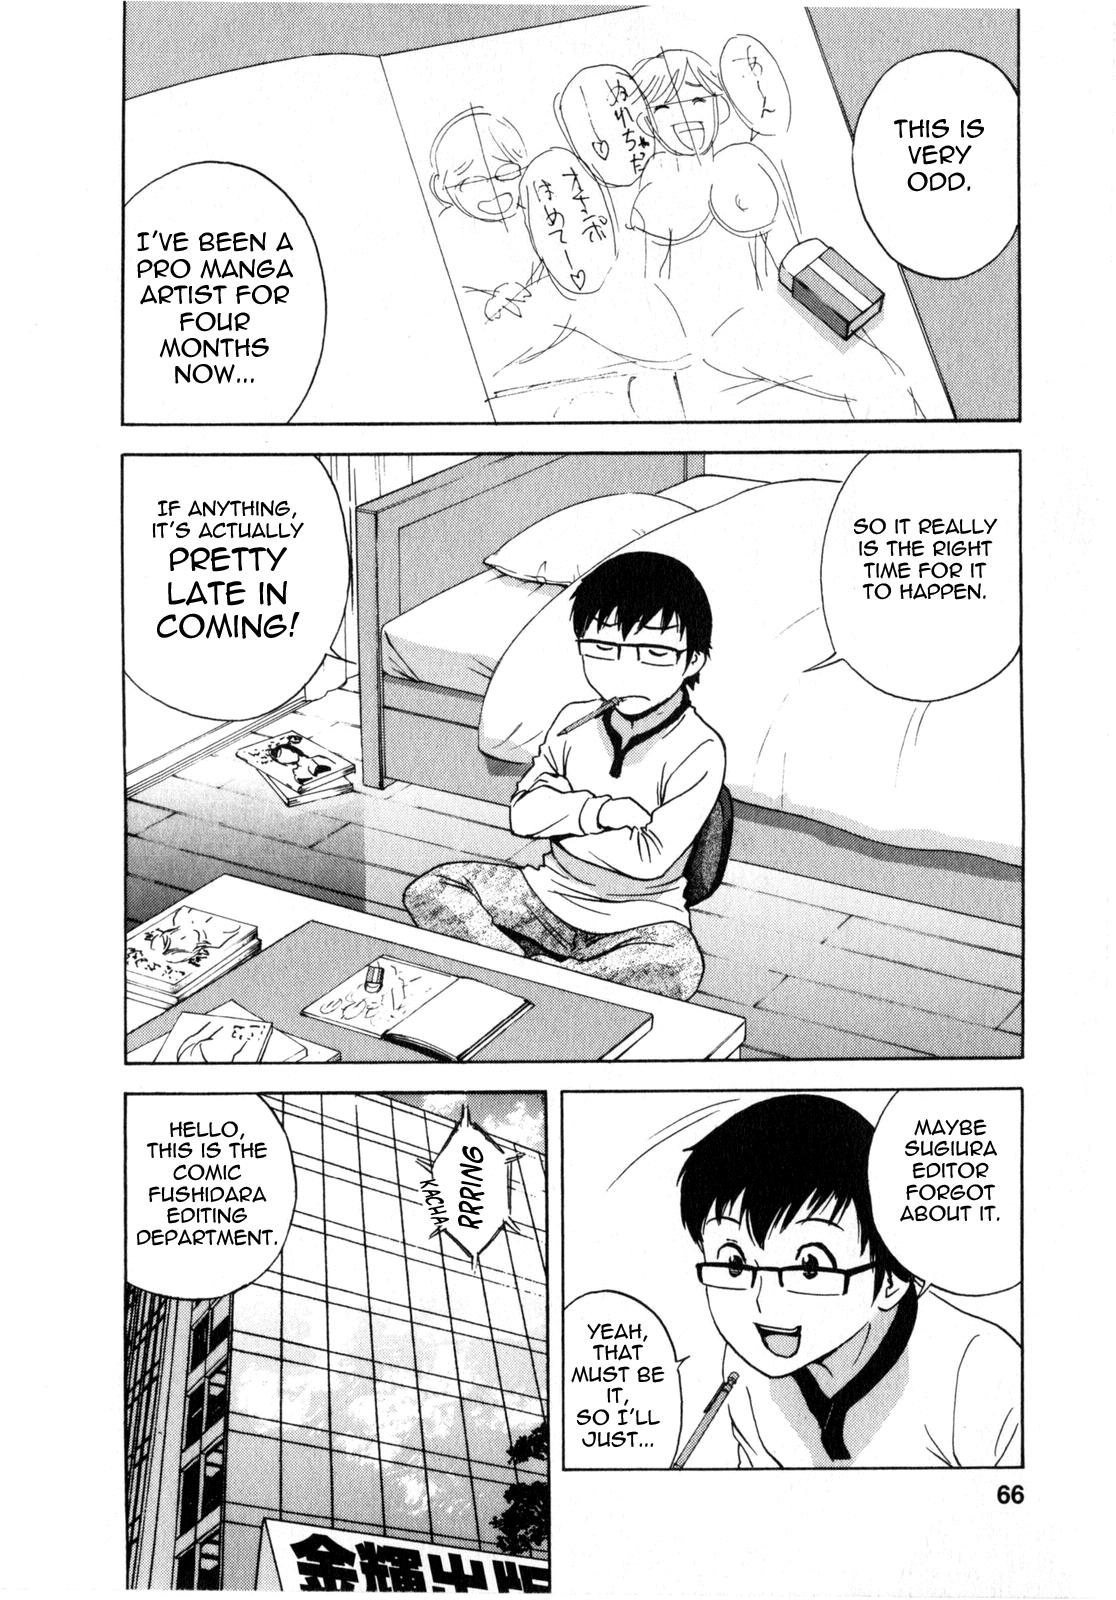 [Hidemaru] Life with Married Women Just Like a Manga 2 - Ch. 1-4 [English] {Tadanohito} 68